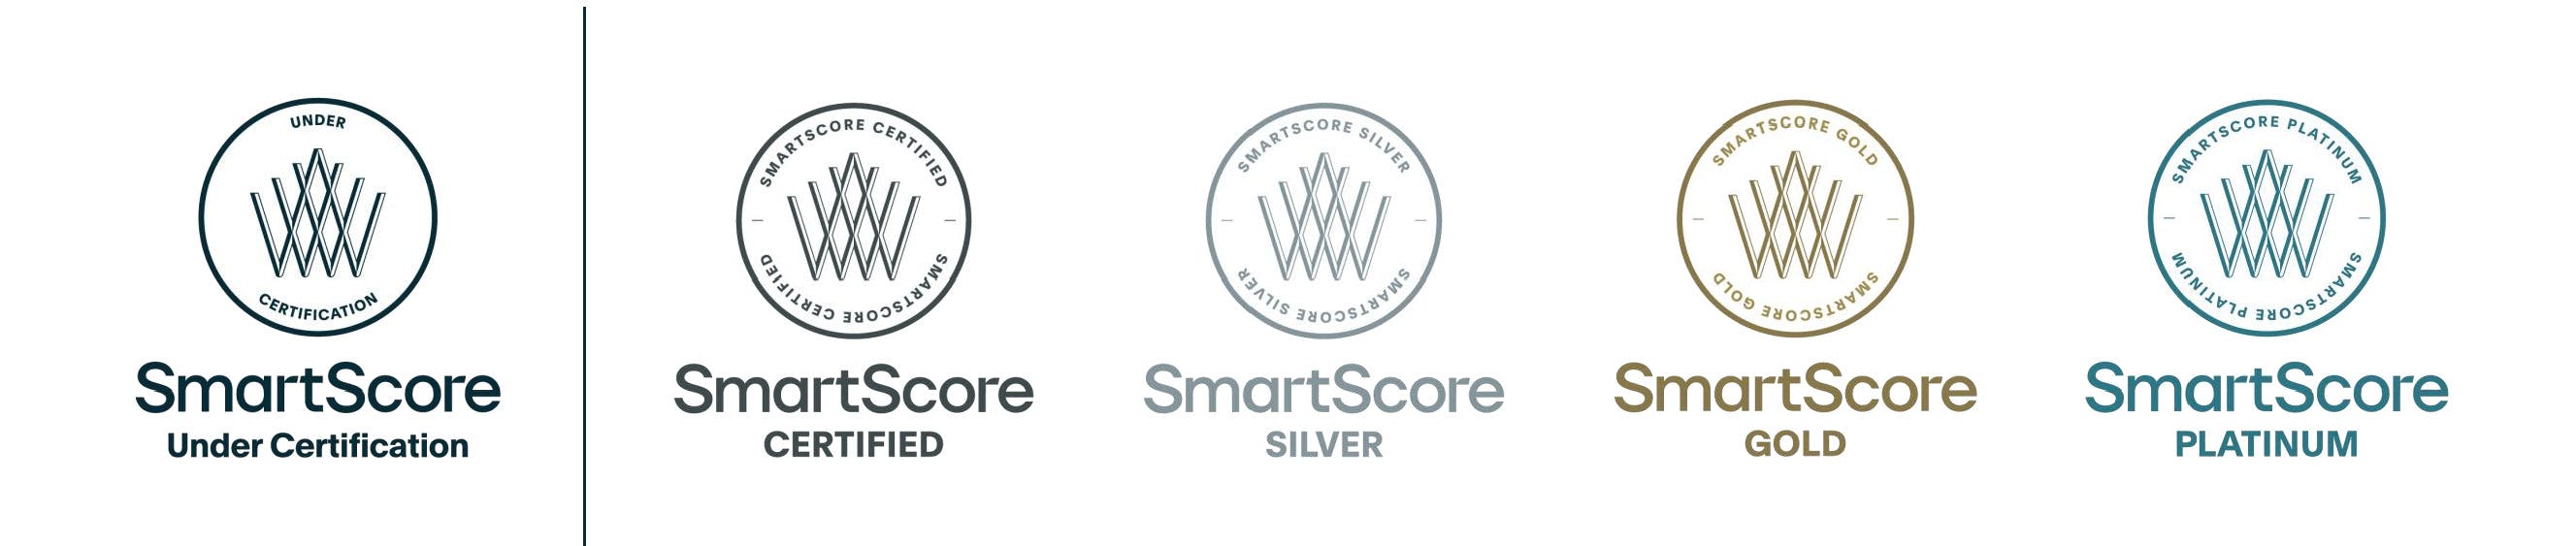 niveau de certification smart score